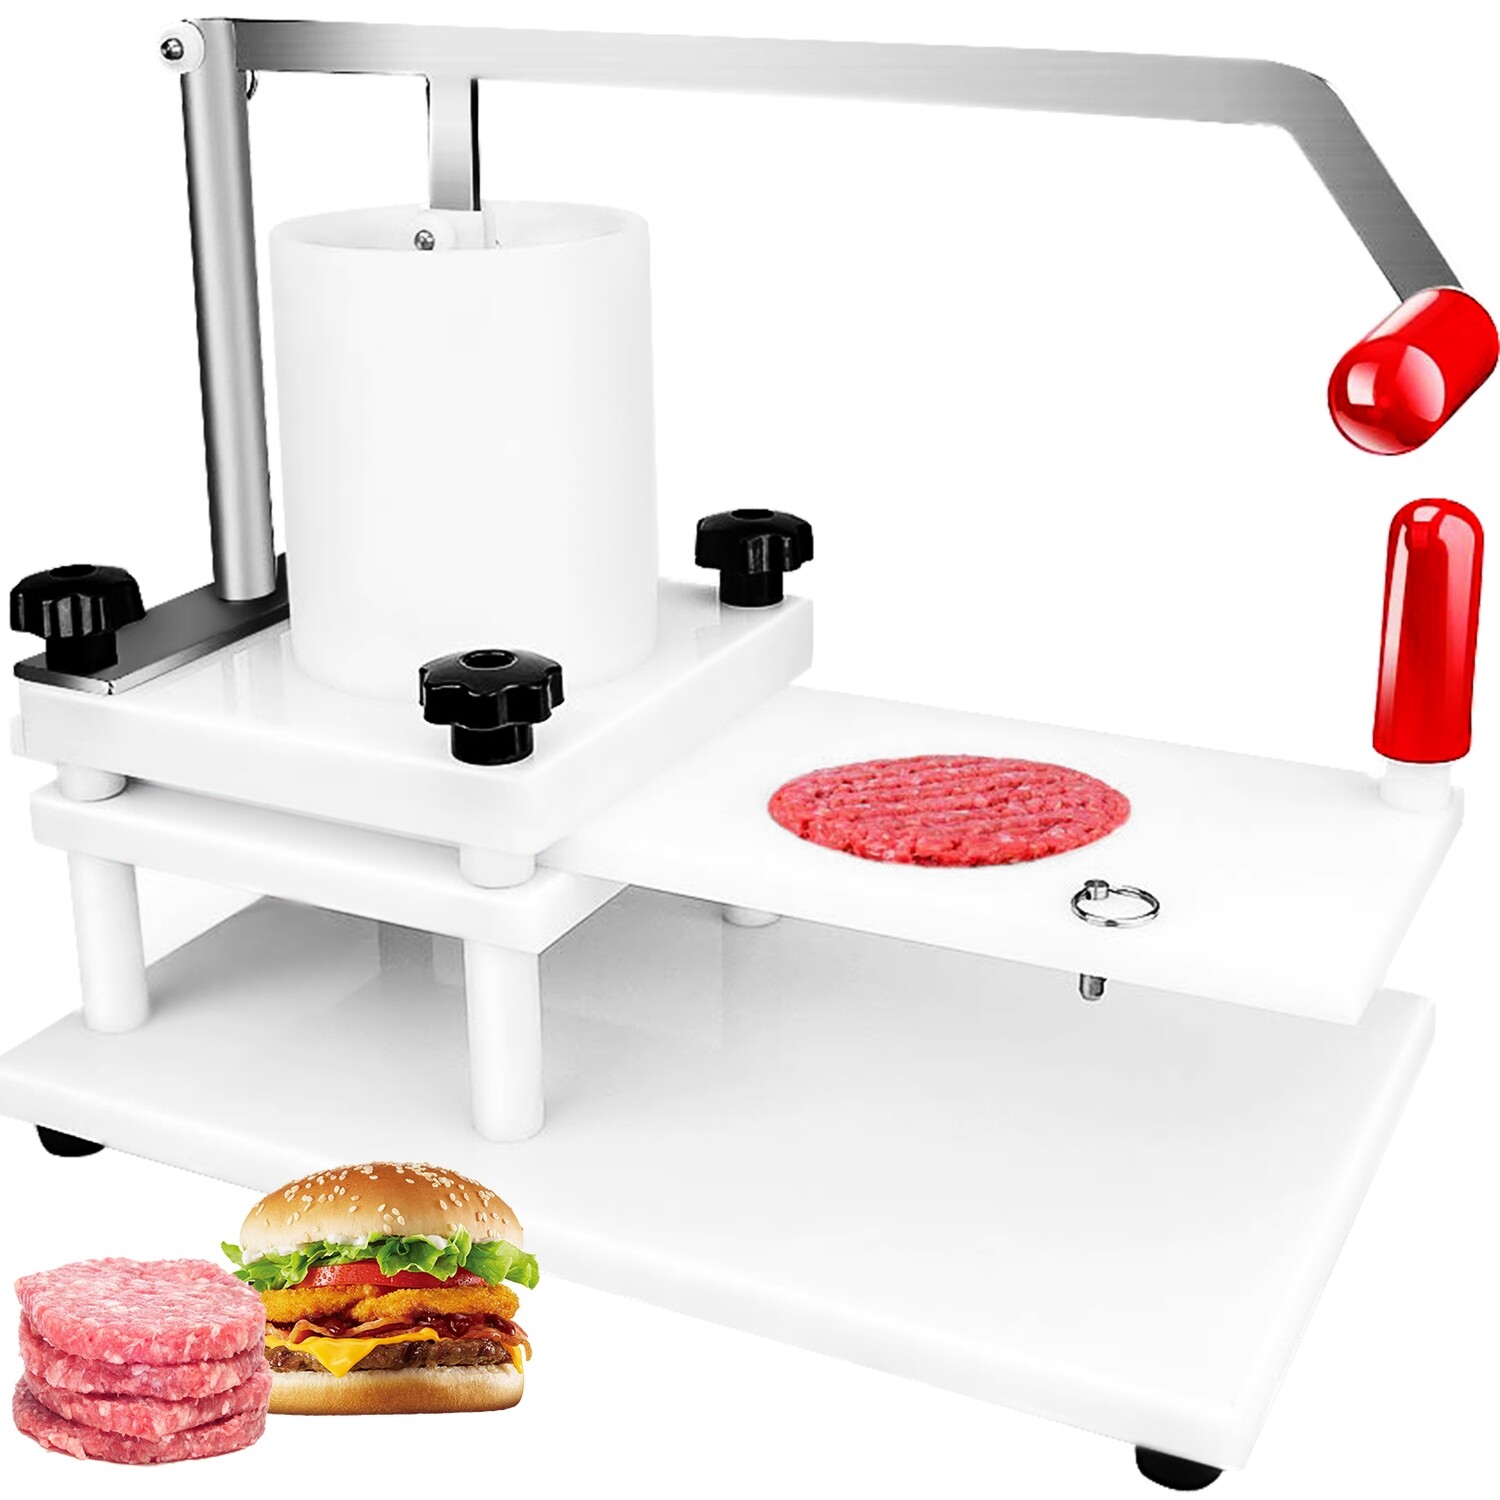 5.1-inch Commercial Burger Press Machine Maker for Burger, Hamburger Patty